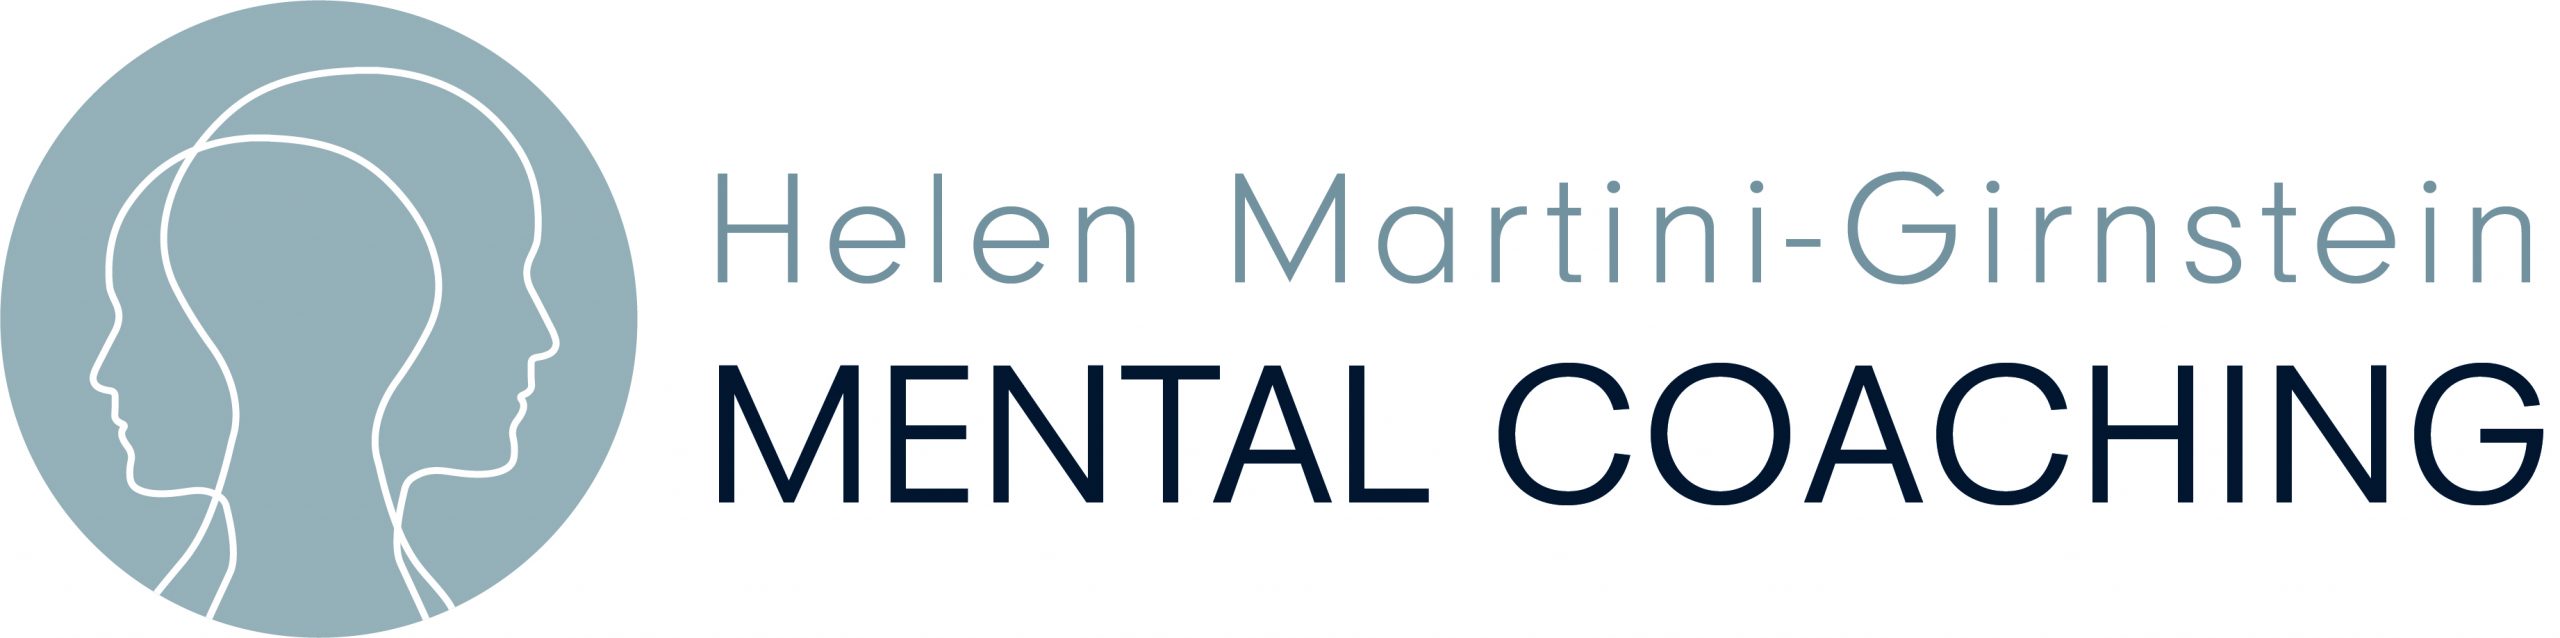 Logo Helen Martini Ginstein – MENTAL COACHING